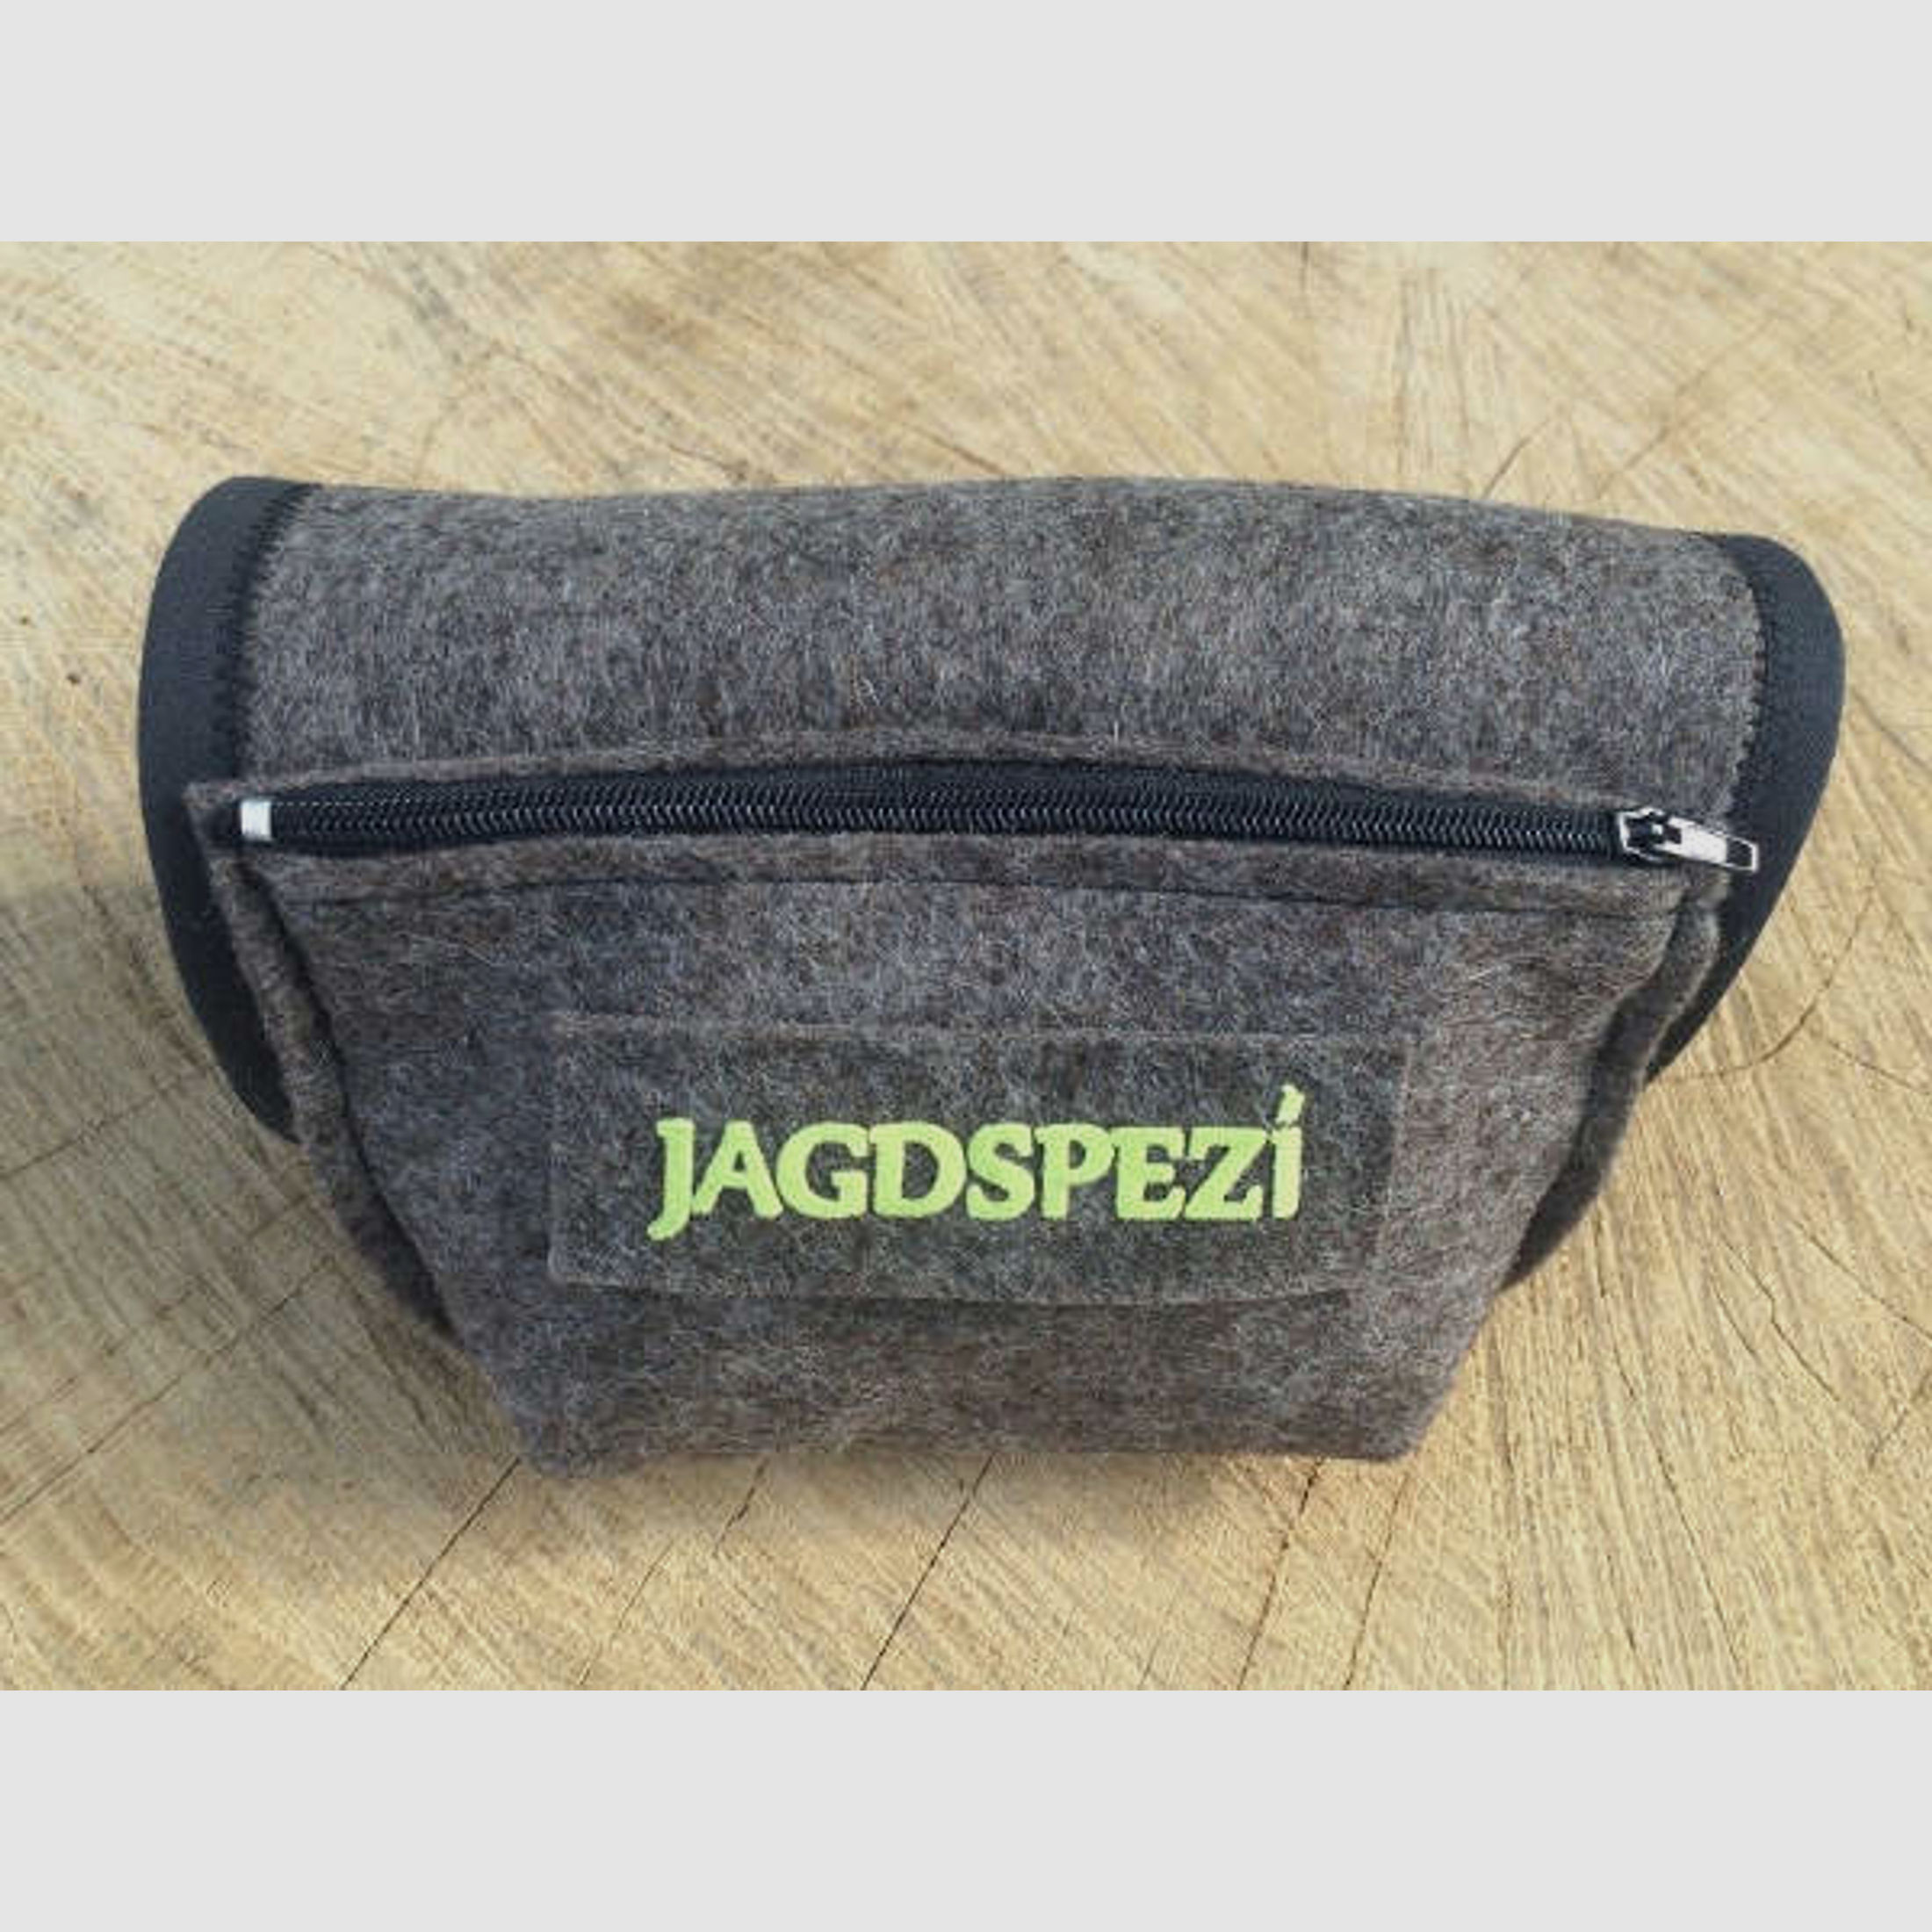 Die JAGDSPEZI-Schafttasche (Variante: Rechtsschaft)